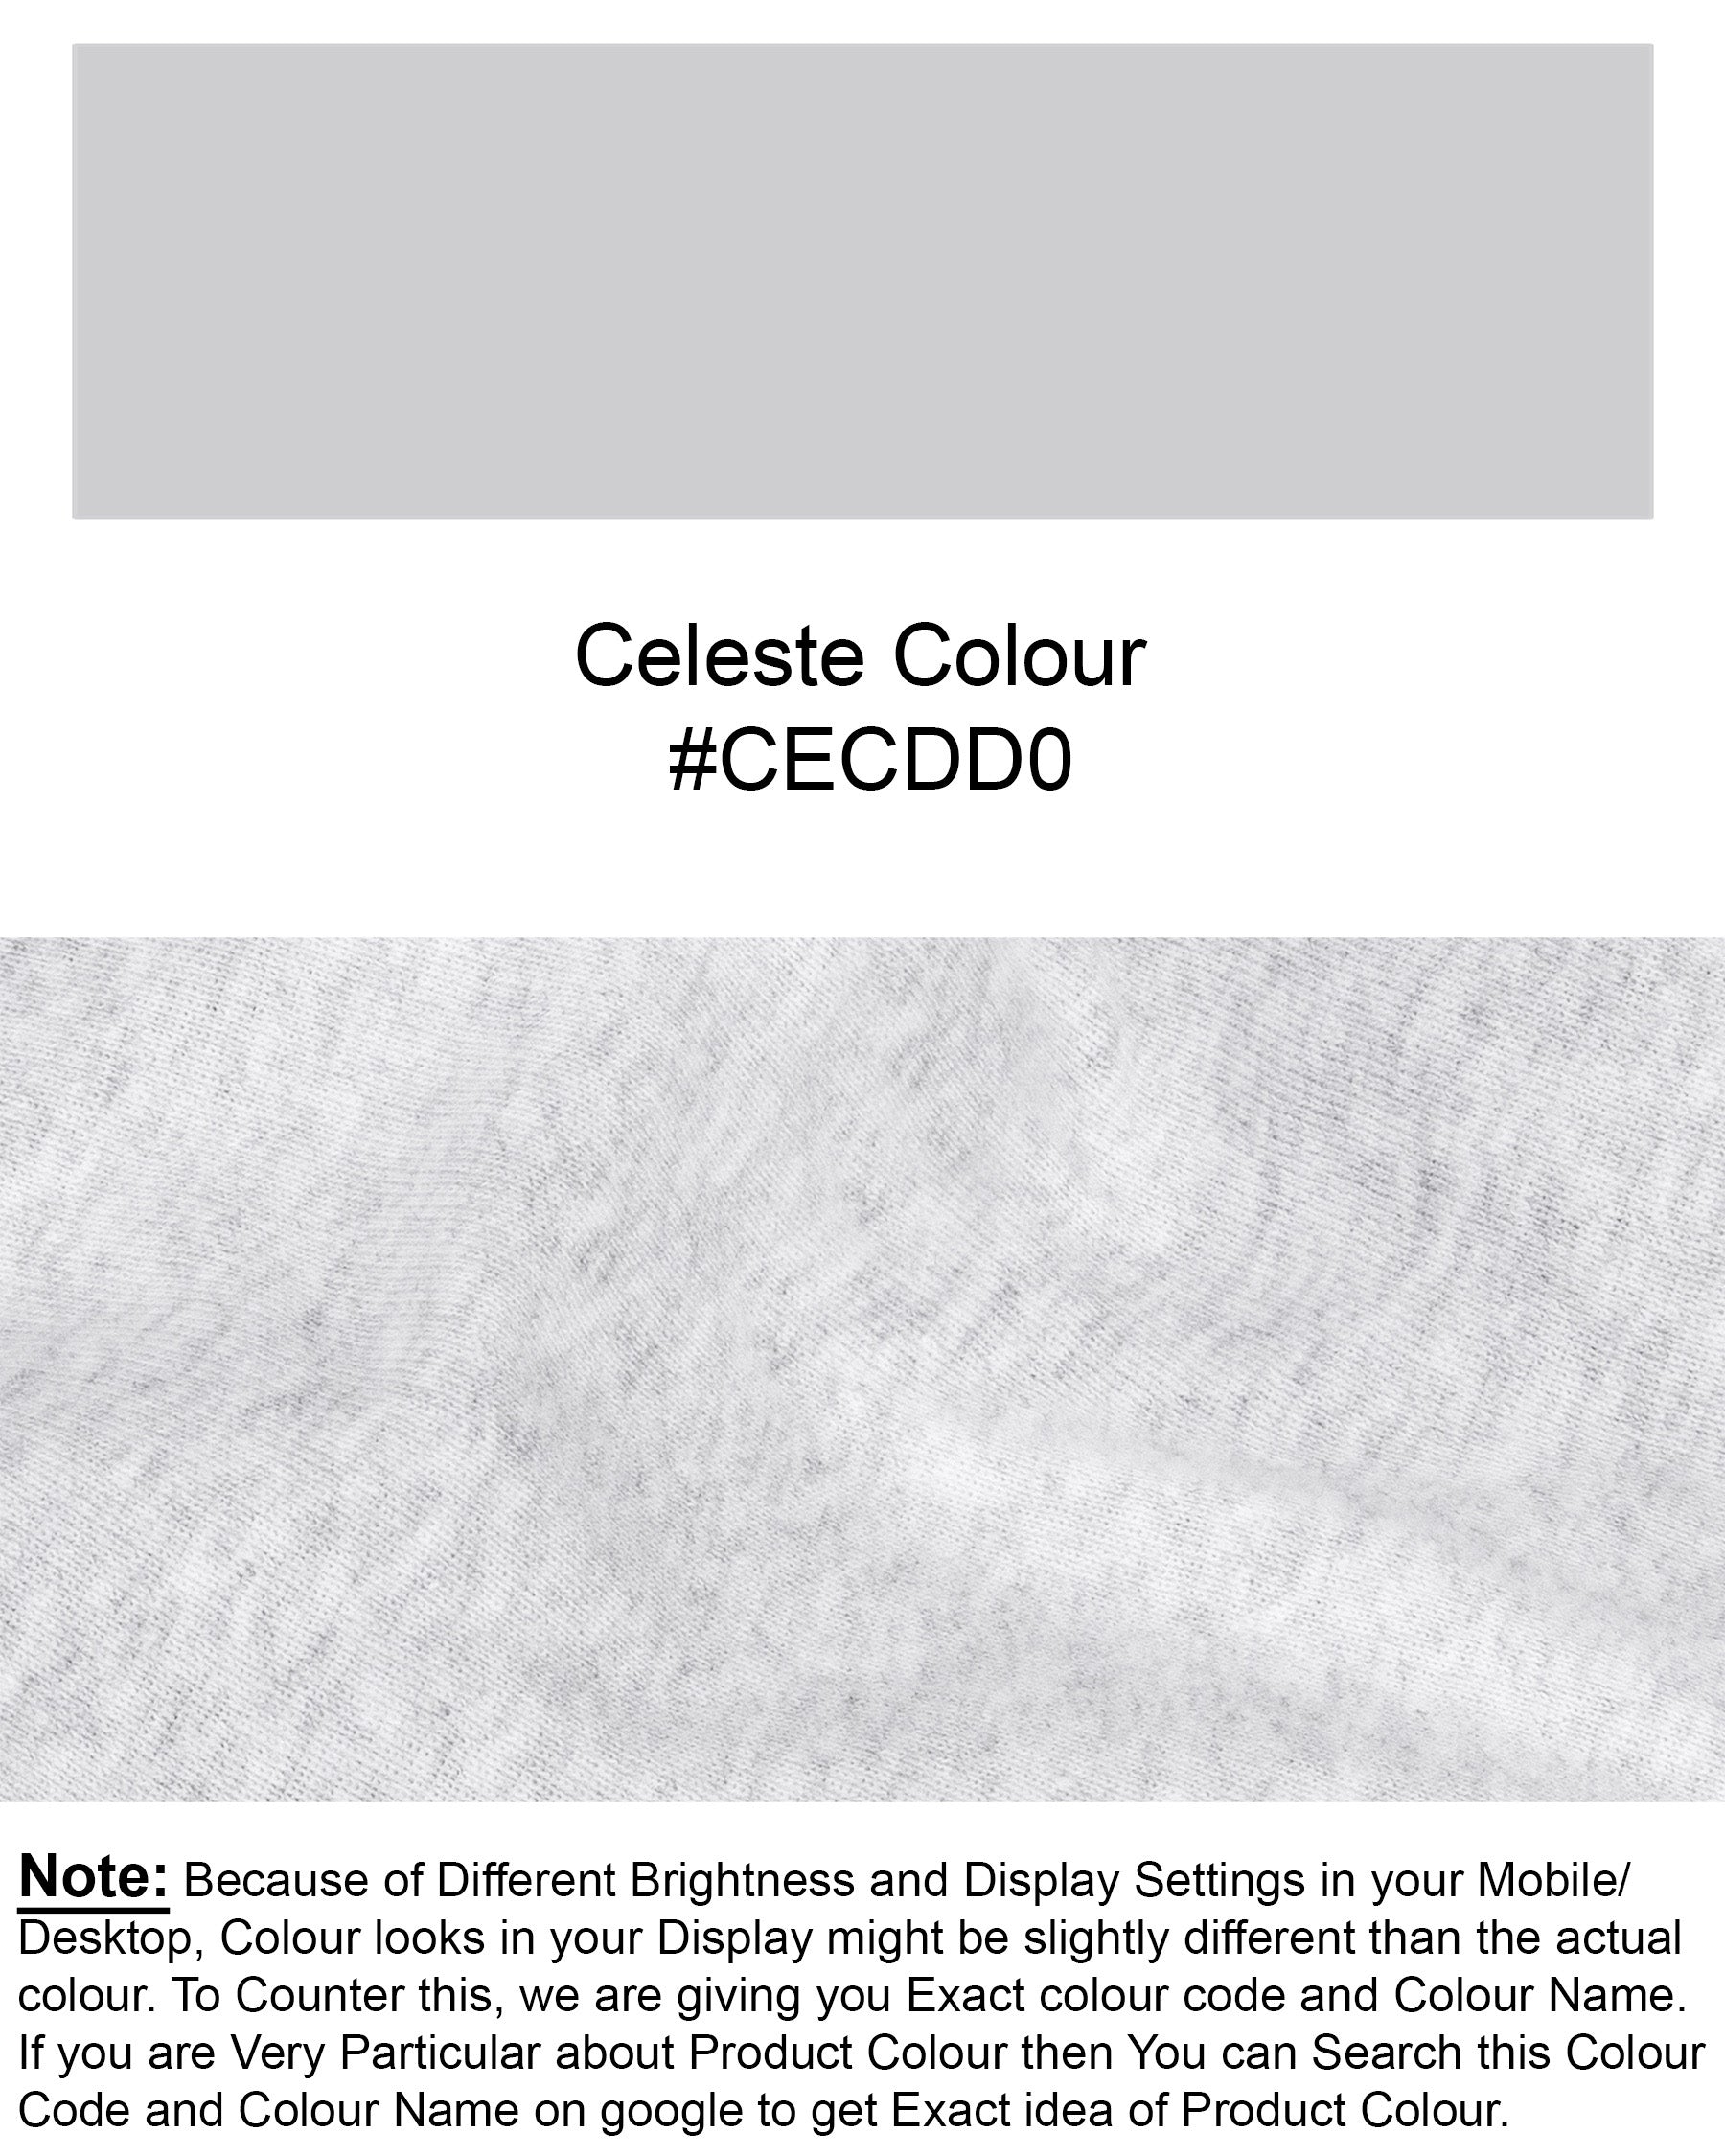 Celeste Grey Full Sleeve Premium Cotton Jersey Sweatshirt TS451-S, TS451-M, TS451-L, TS451-XL, TS451-XXL